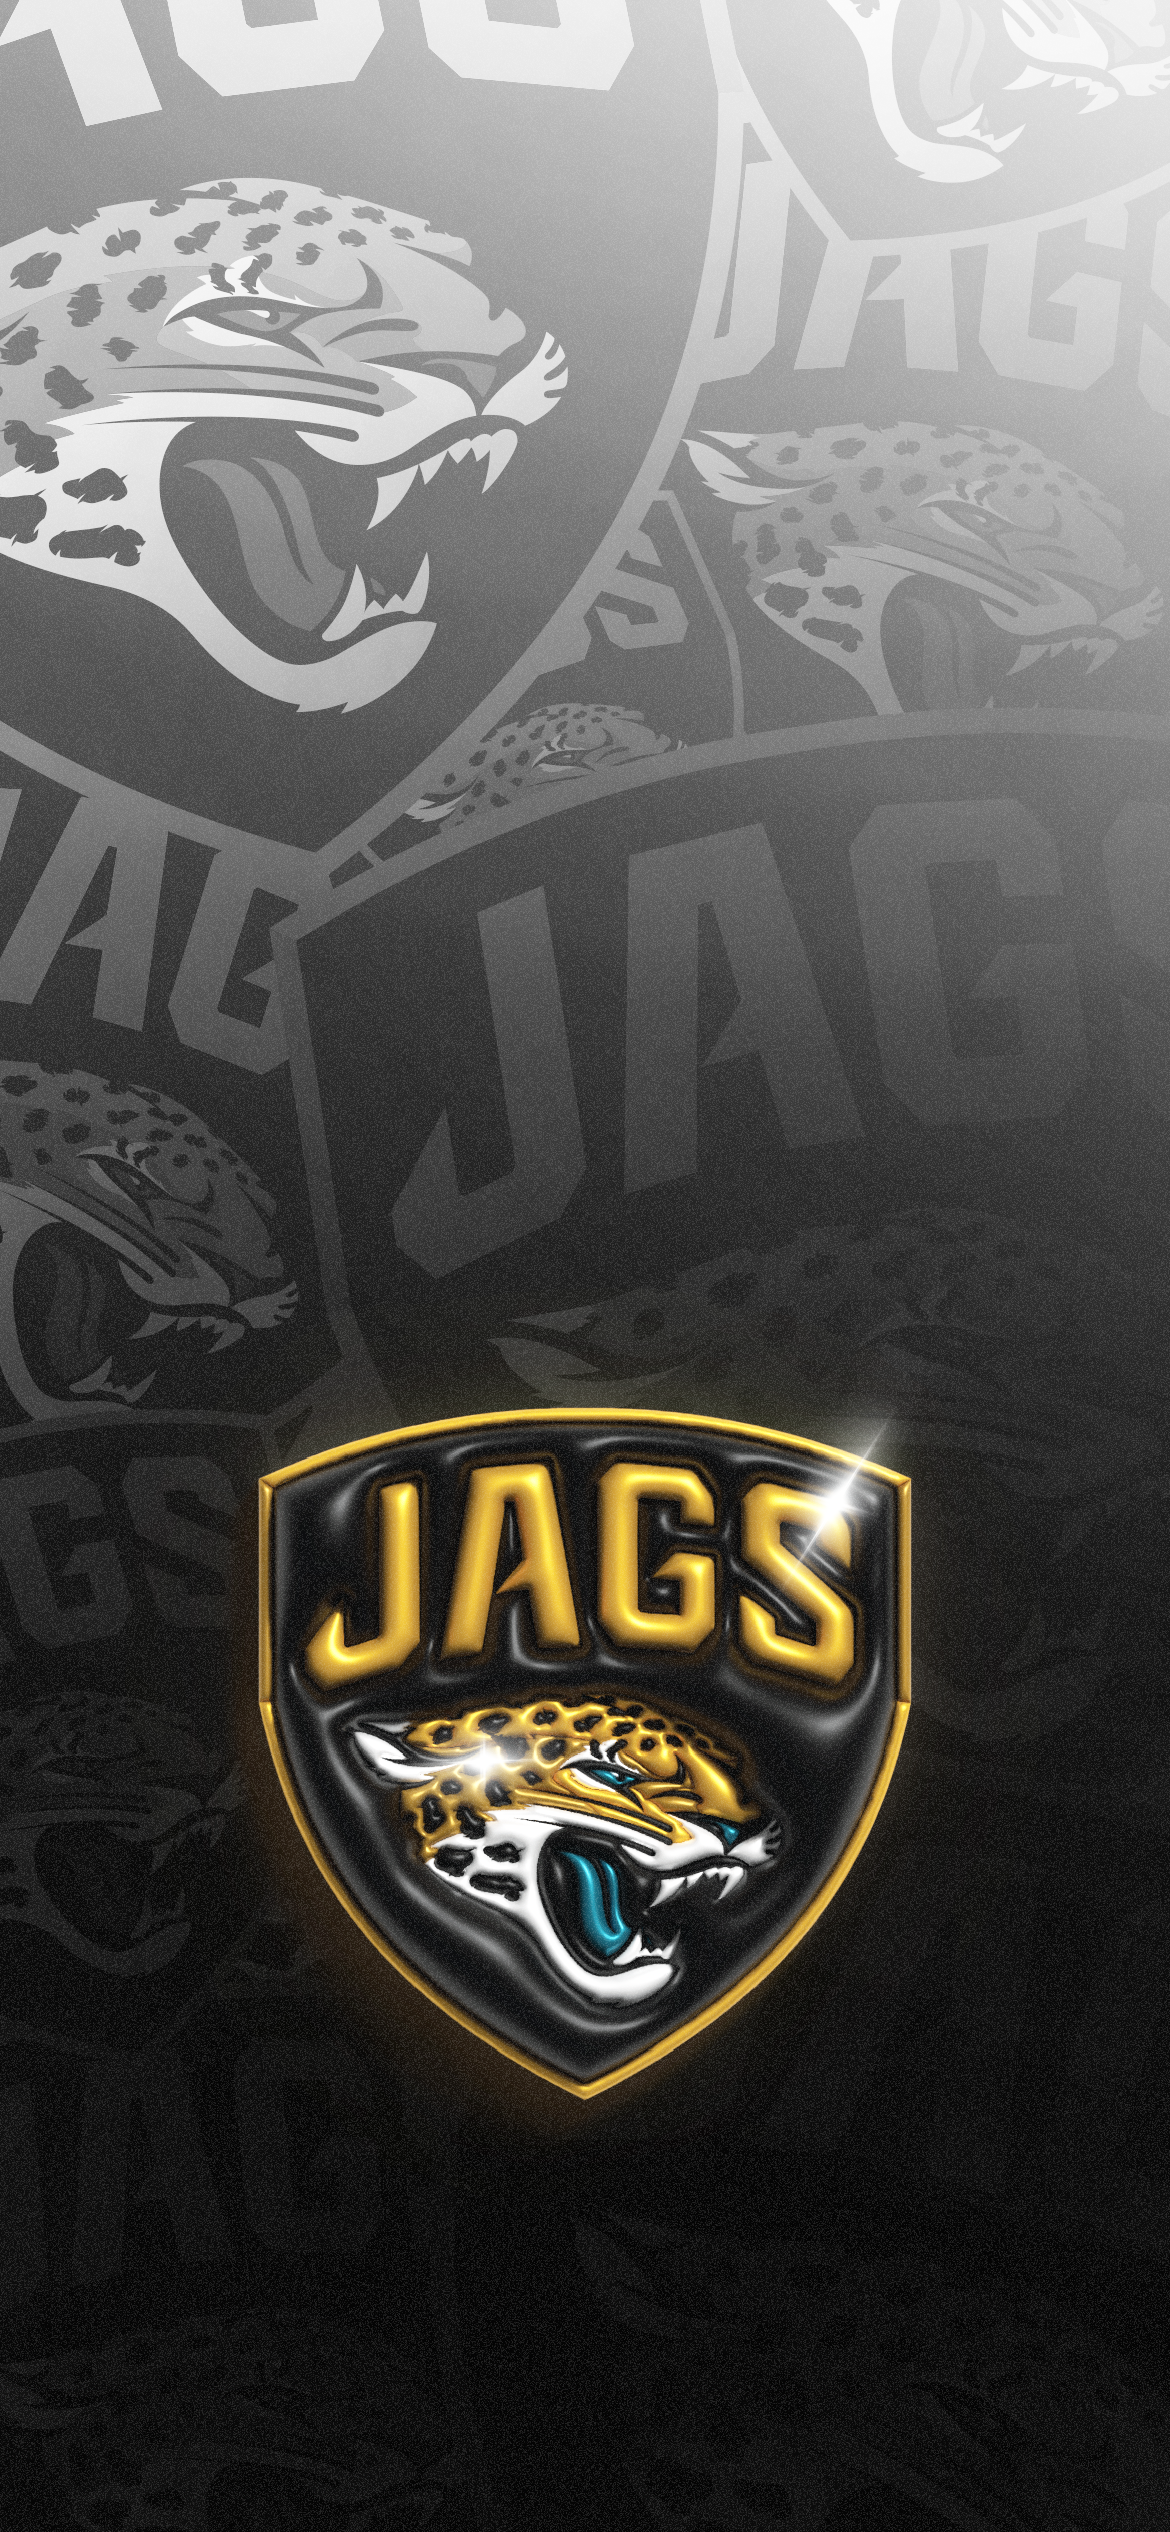 jacksonville jaguars com